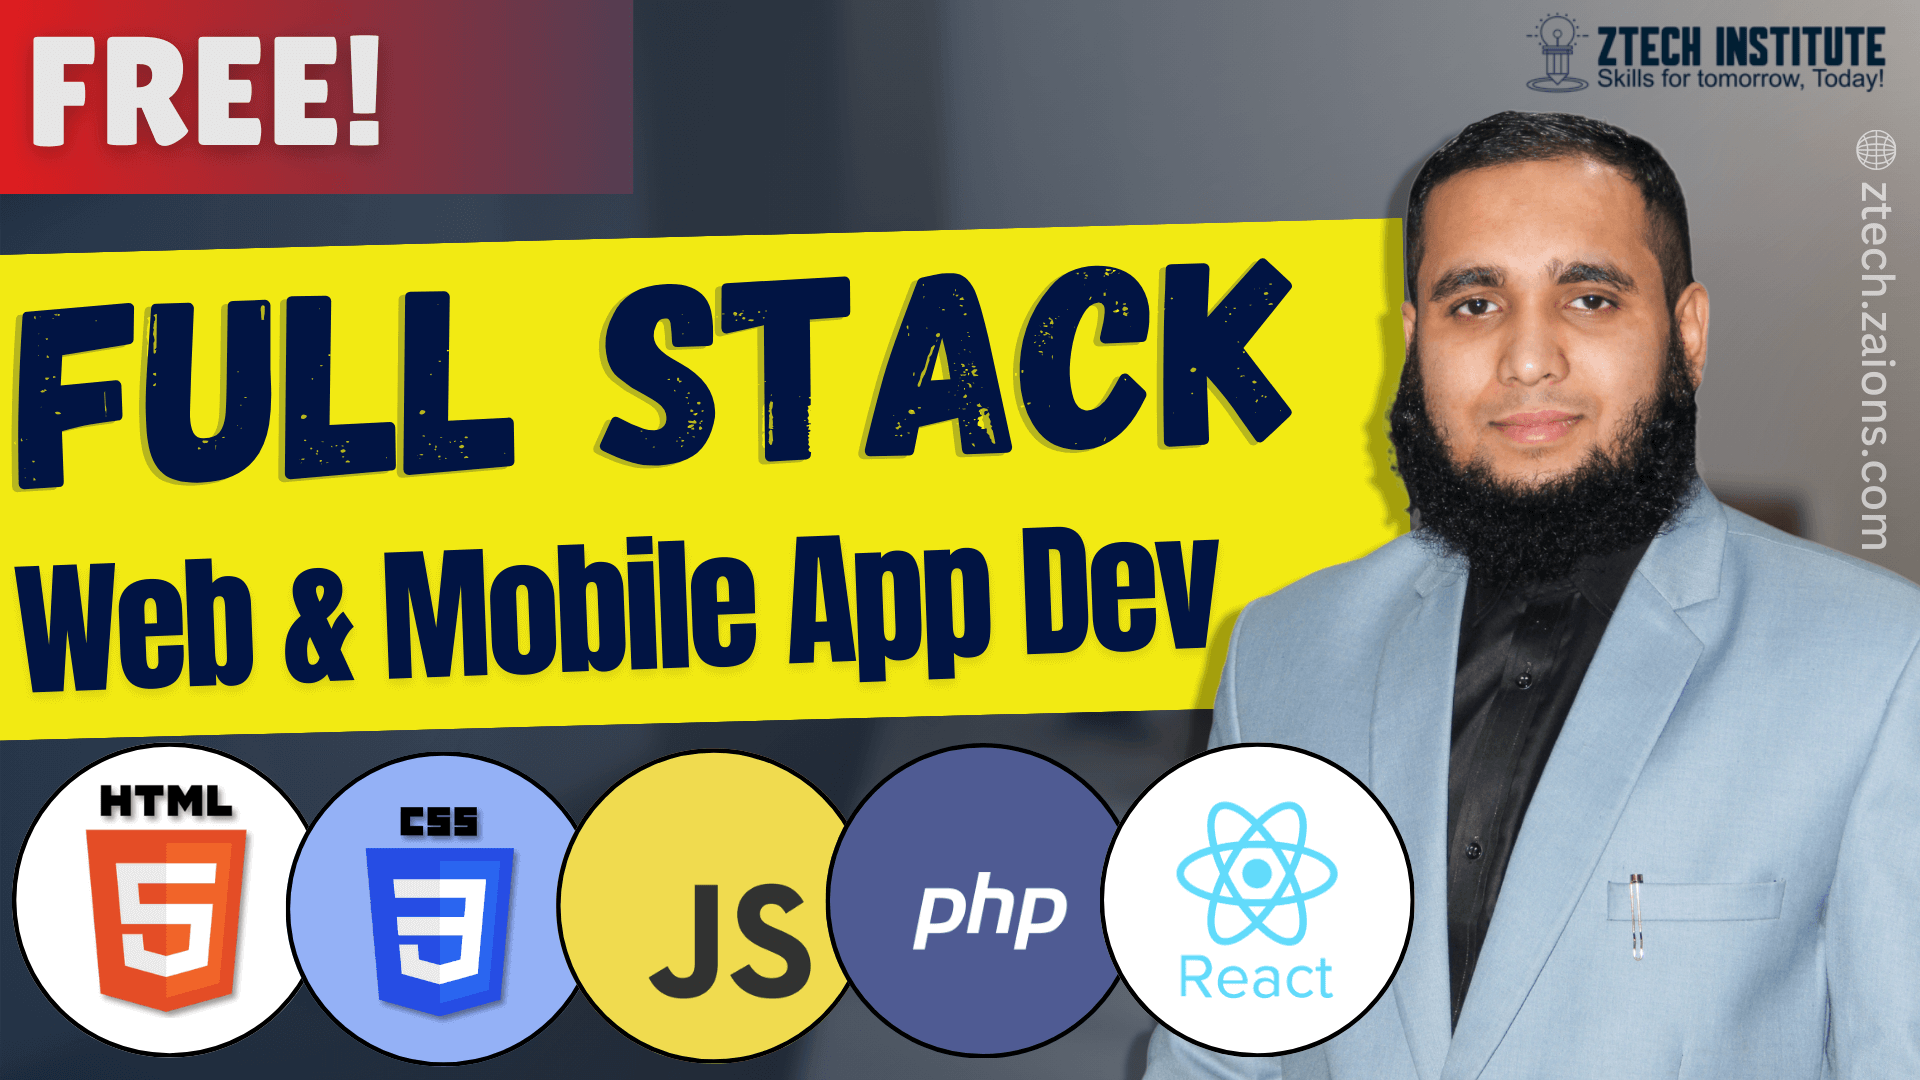 Full Stack Web & Mobile App Development Using JavaScript zaions aoneahsan ahsanmahmood